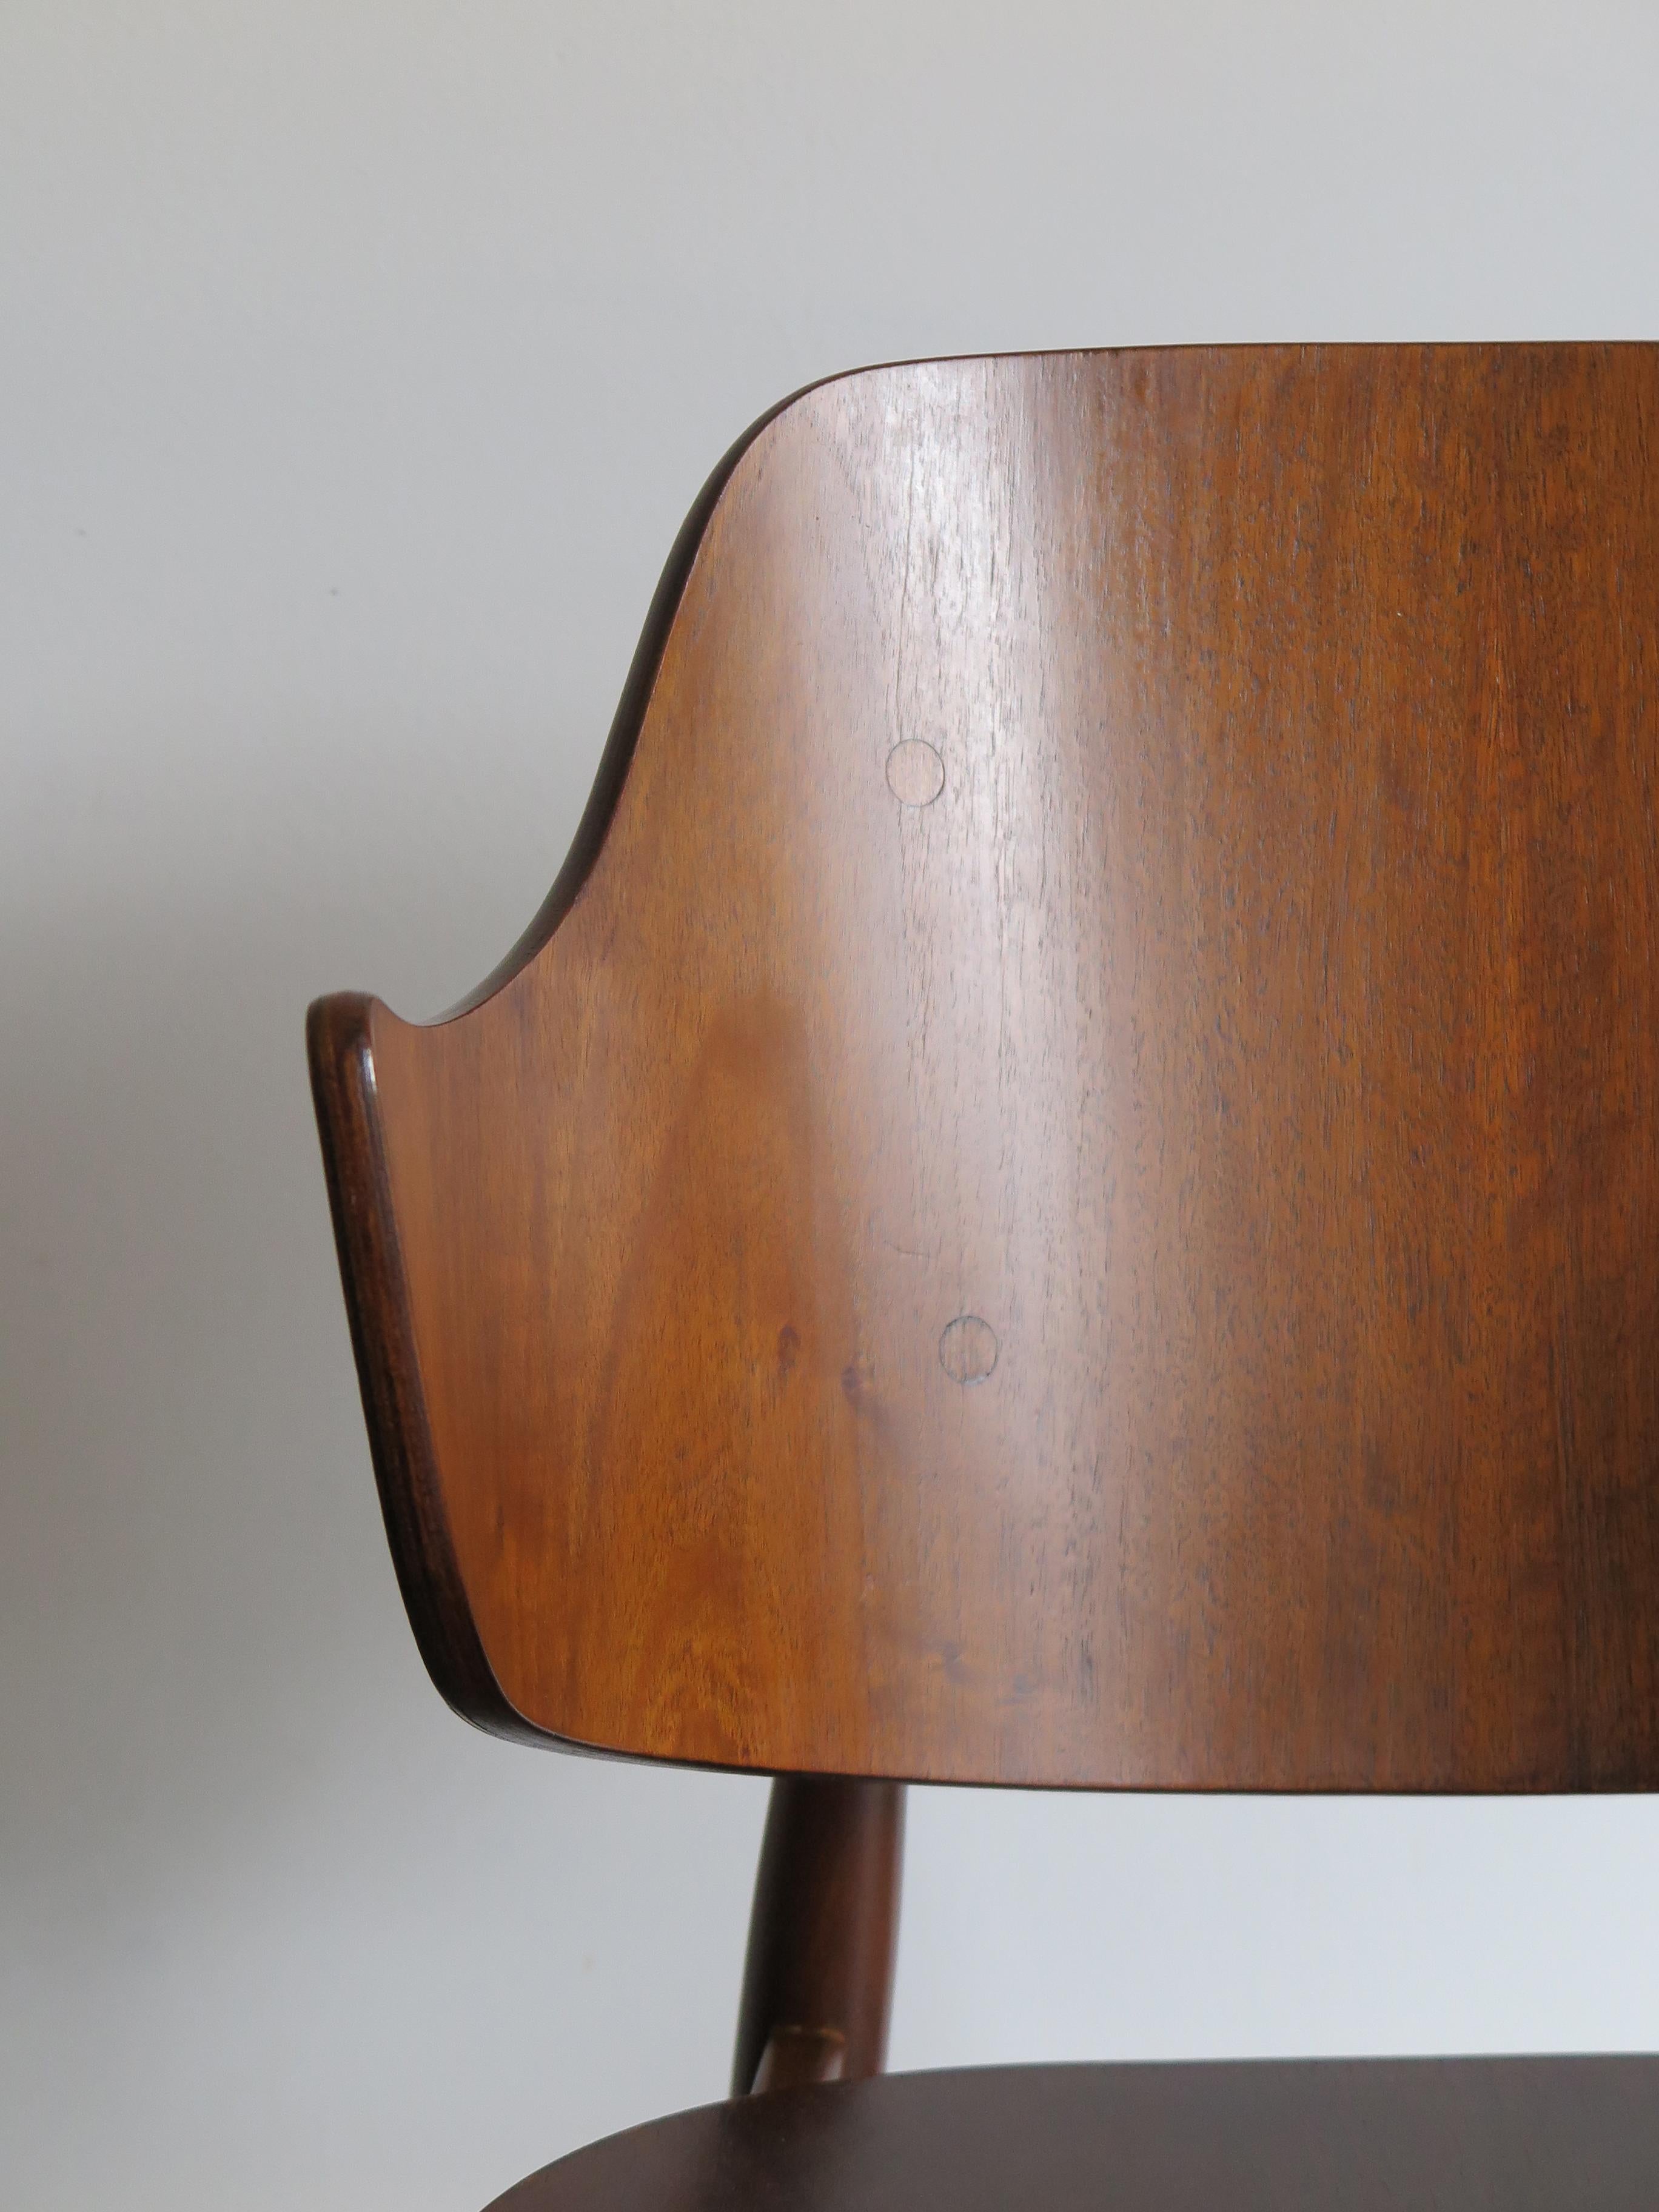 Jens Hjorth Scandinavian Midcentury Modern Wood Chairs Armchairs, 1950s 6